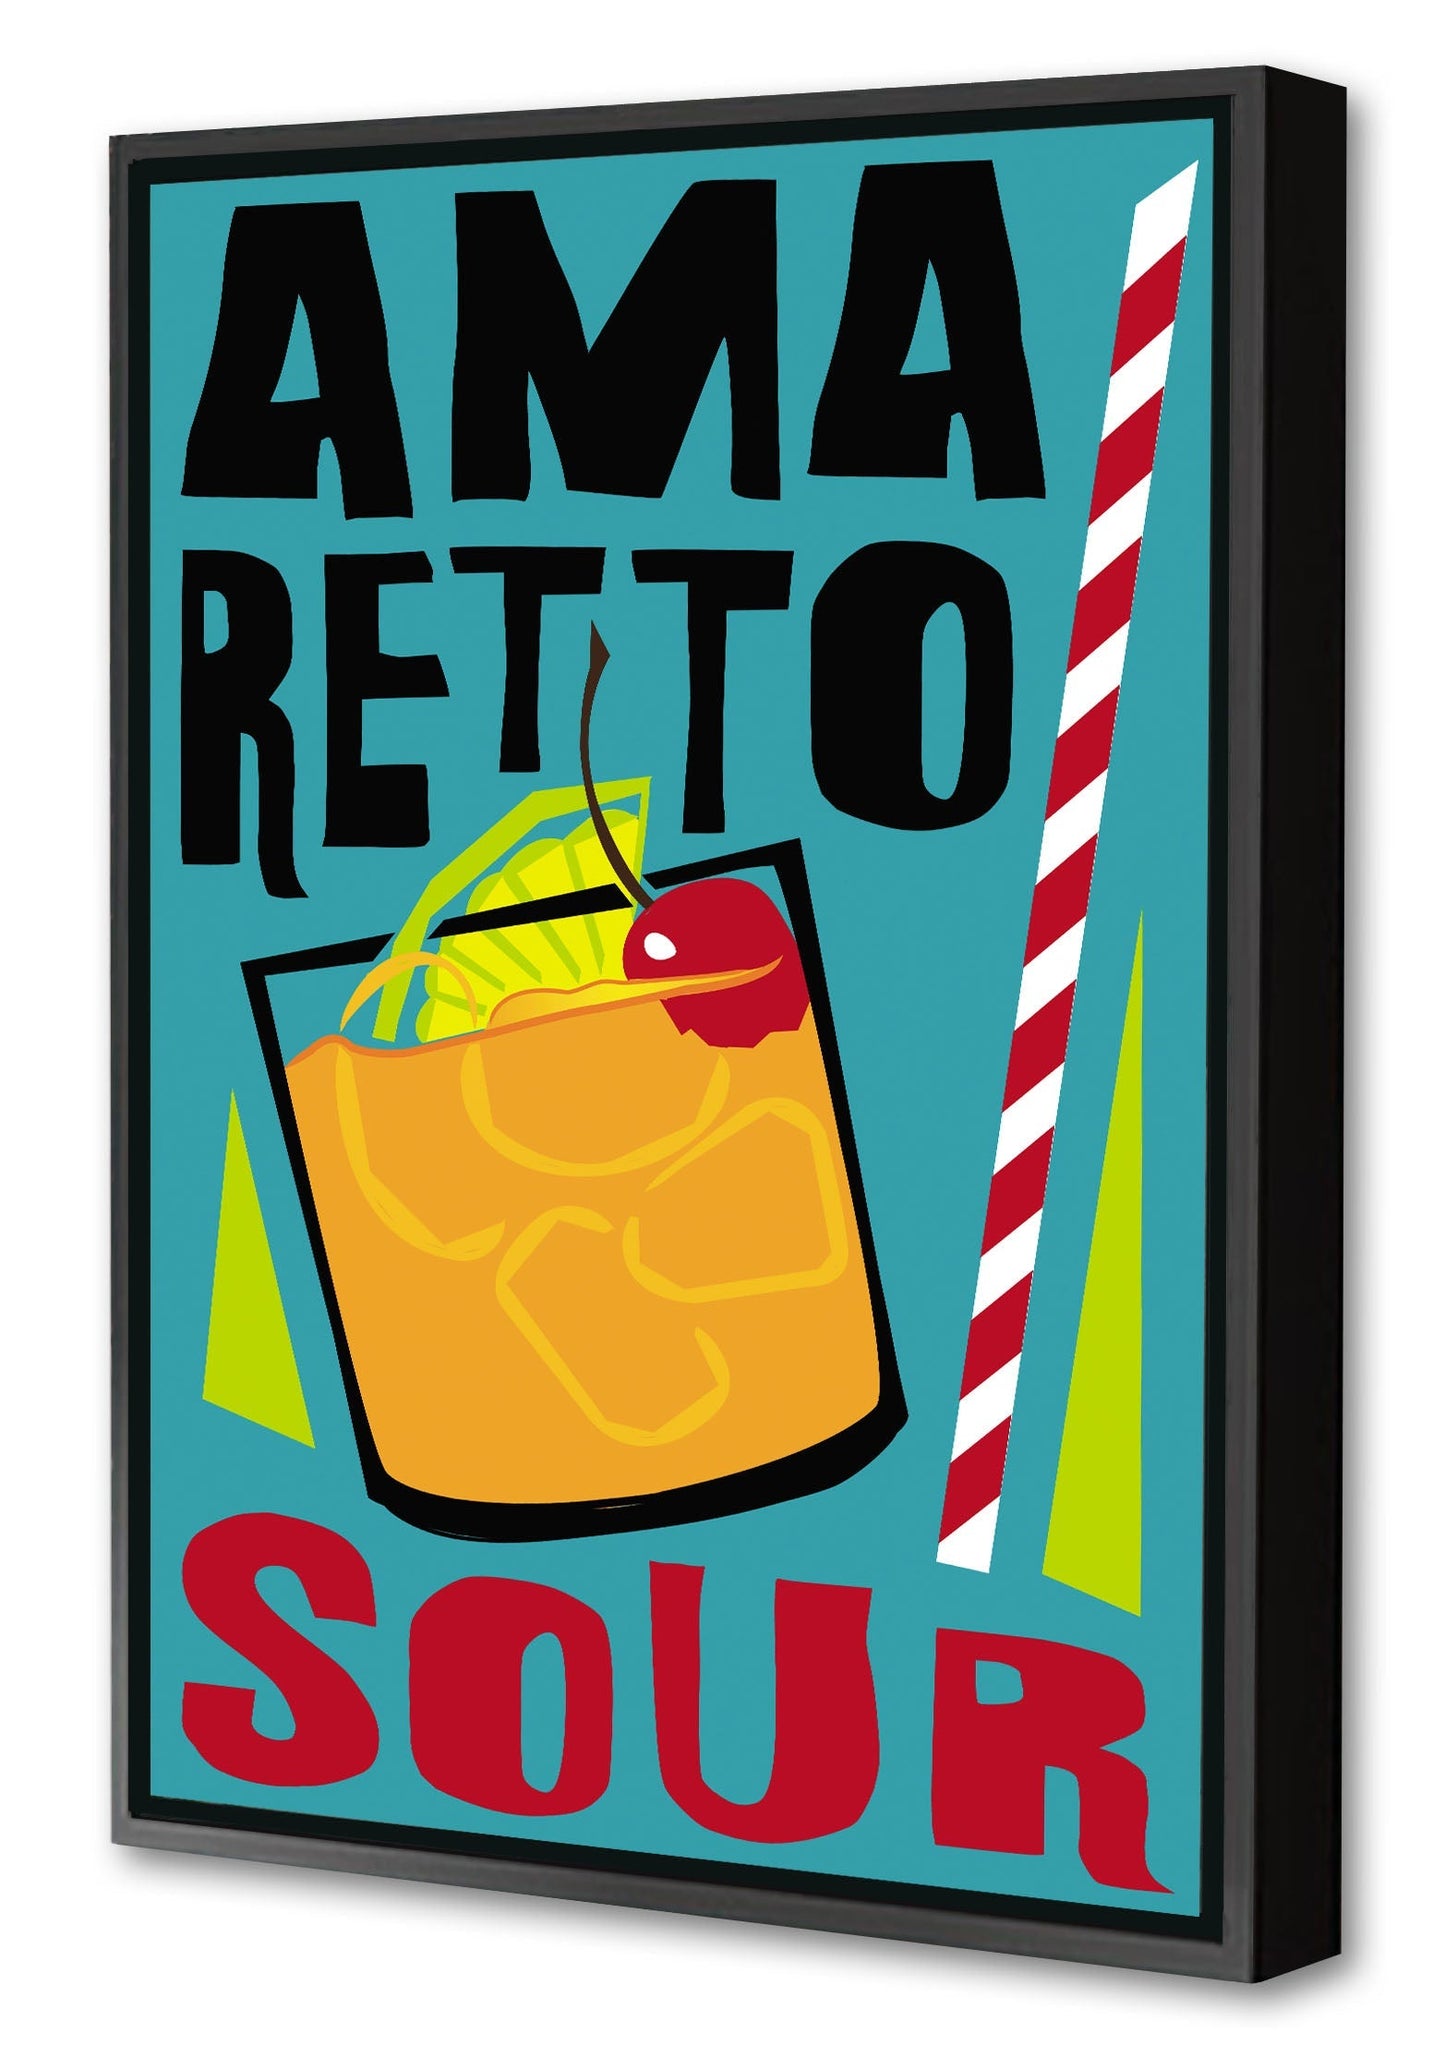 Amaretto-cocktails, print-Canvas Print with Box Frame-40 x 60 cm-BLUE SHAKER